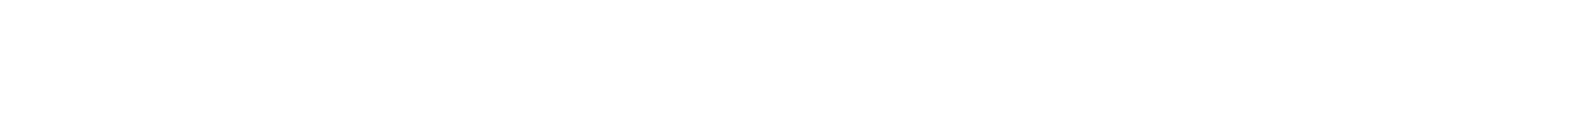 Swiss Prime Site logo large for dark backgrounds (transparent PNG)